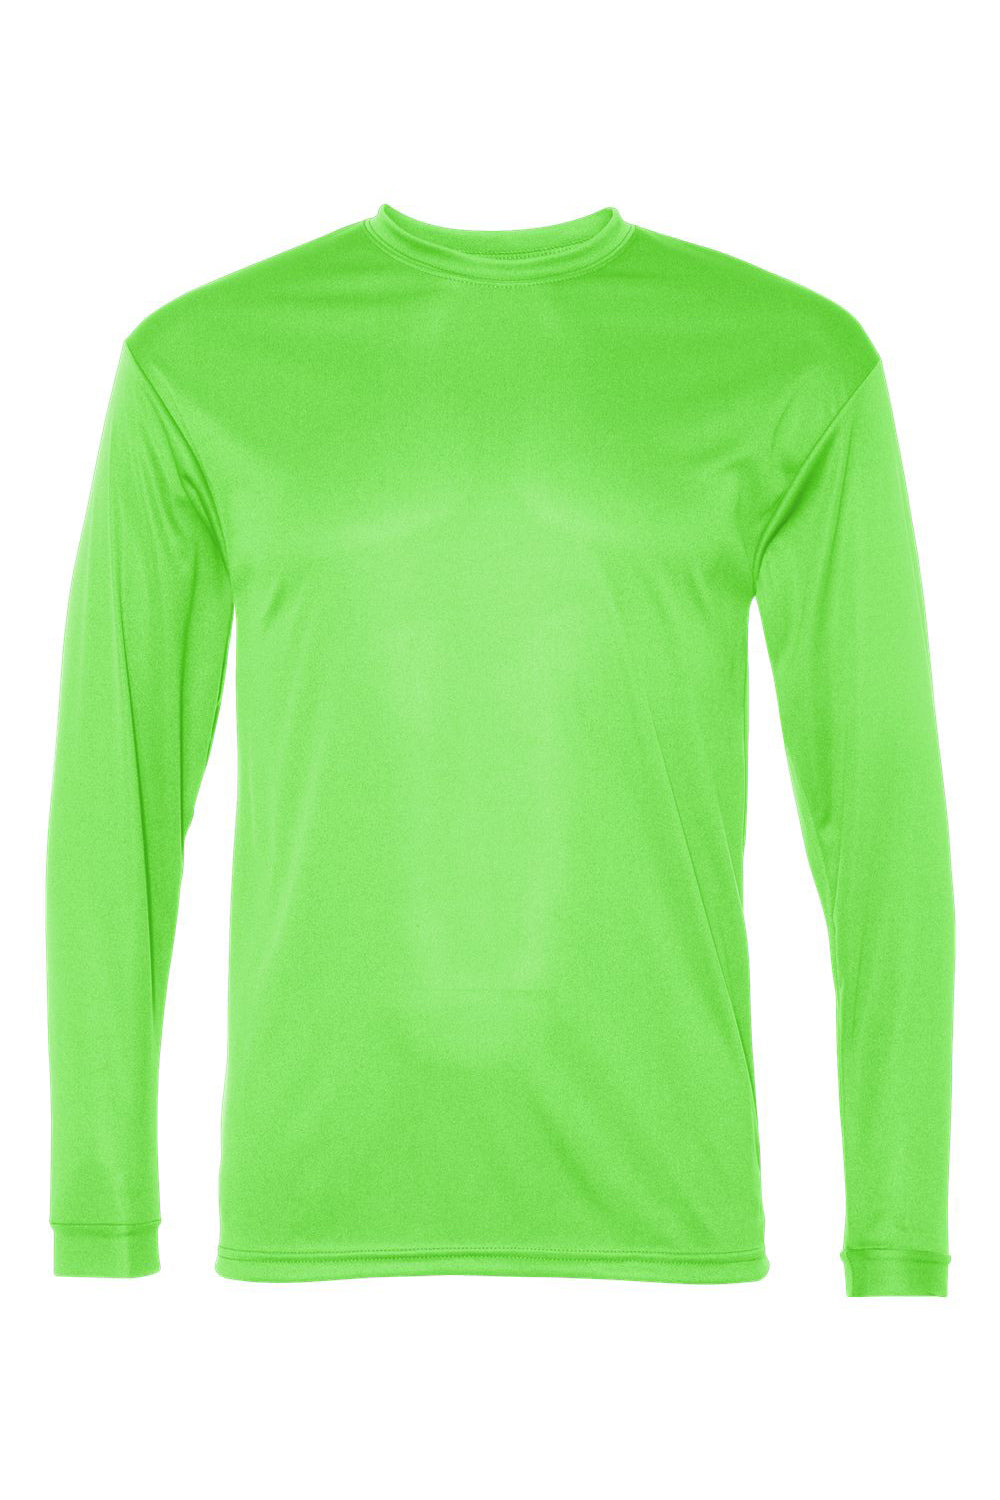 C2 Sport 5104 Mens Performance Moisture Wicking Long Sleeve Crewneck T-Shirt Lime Green Flat Front